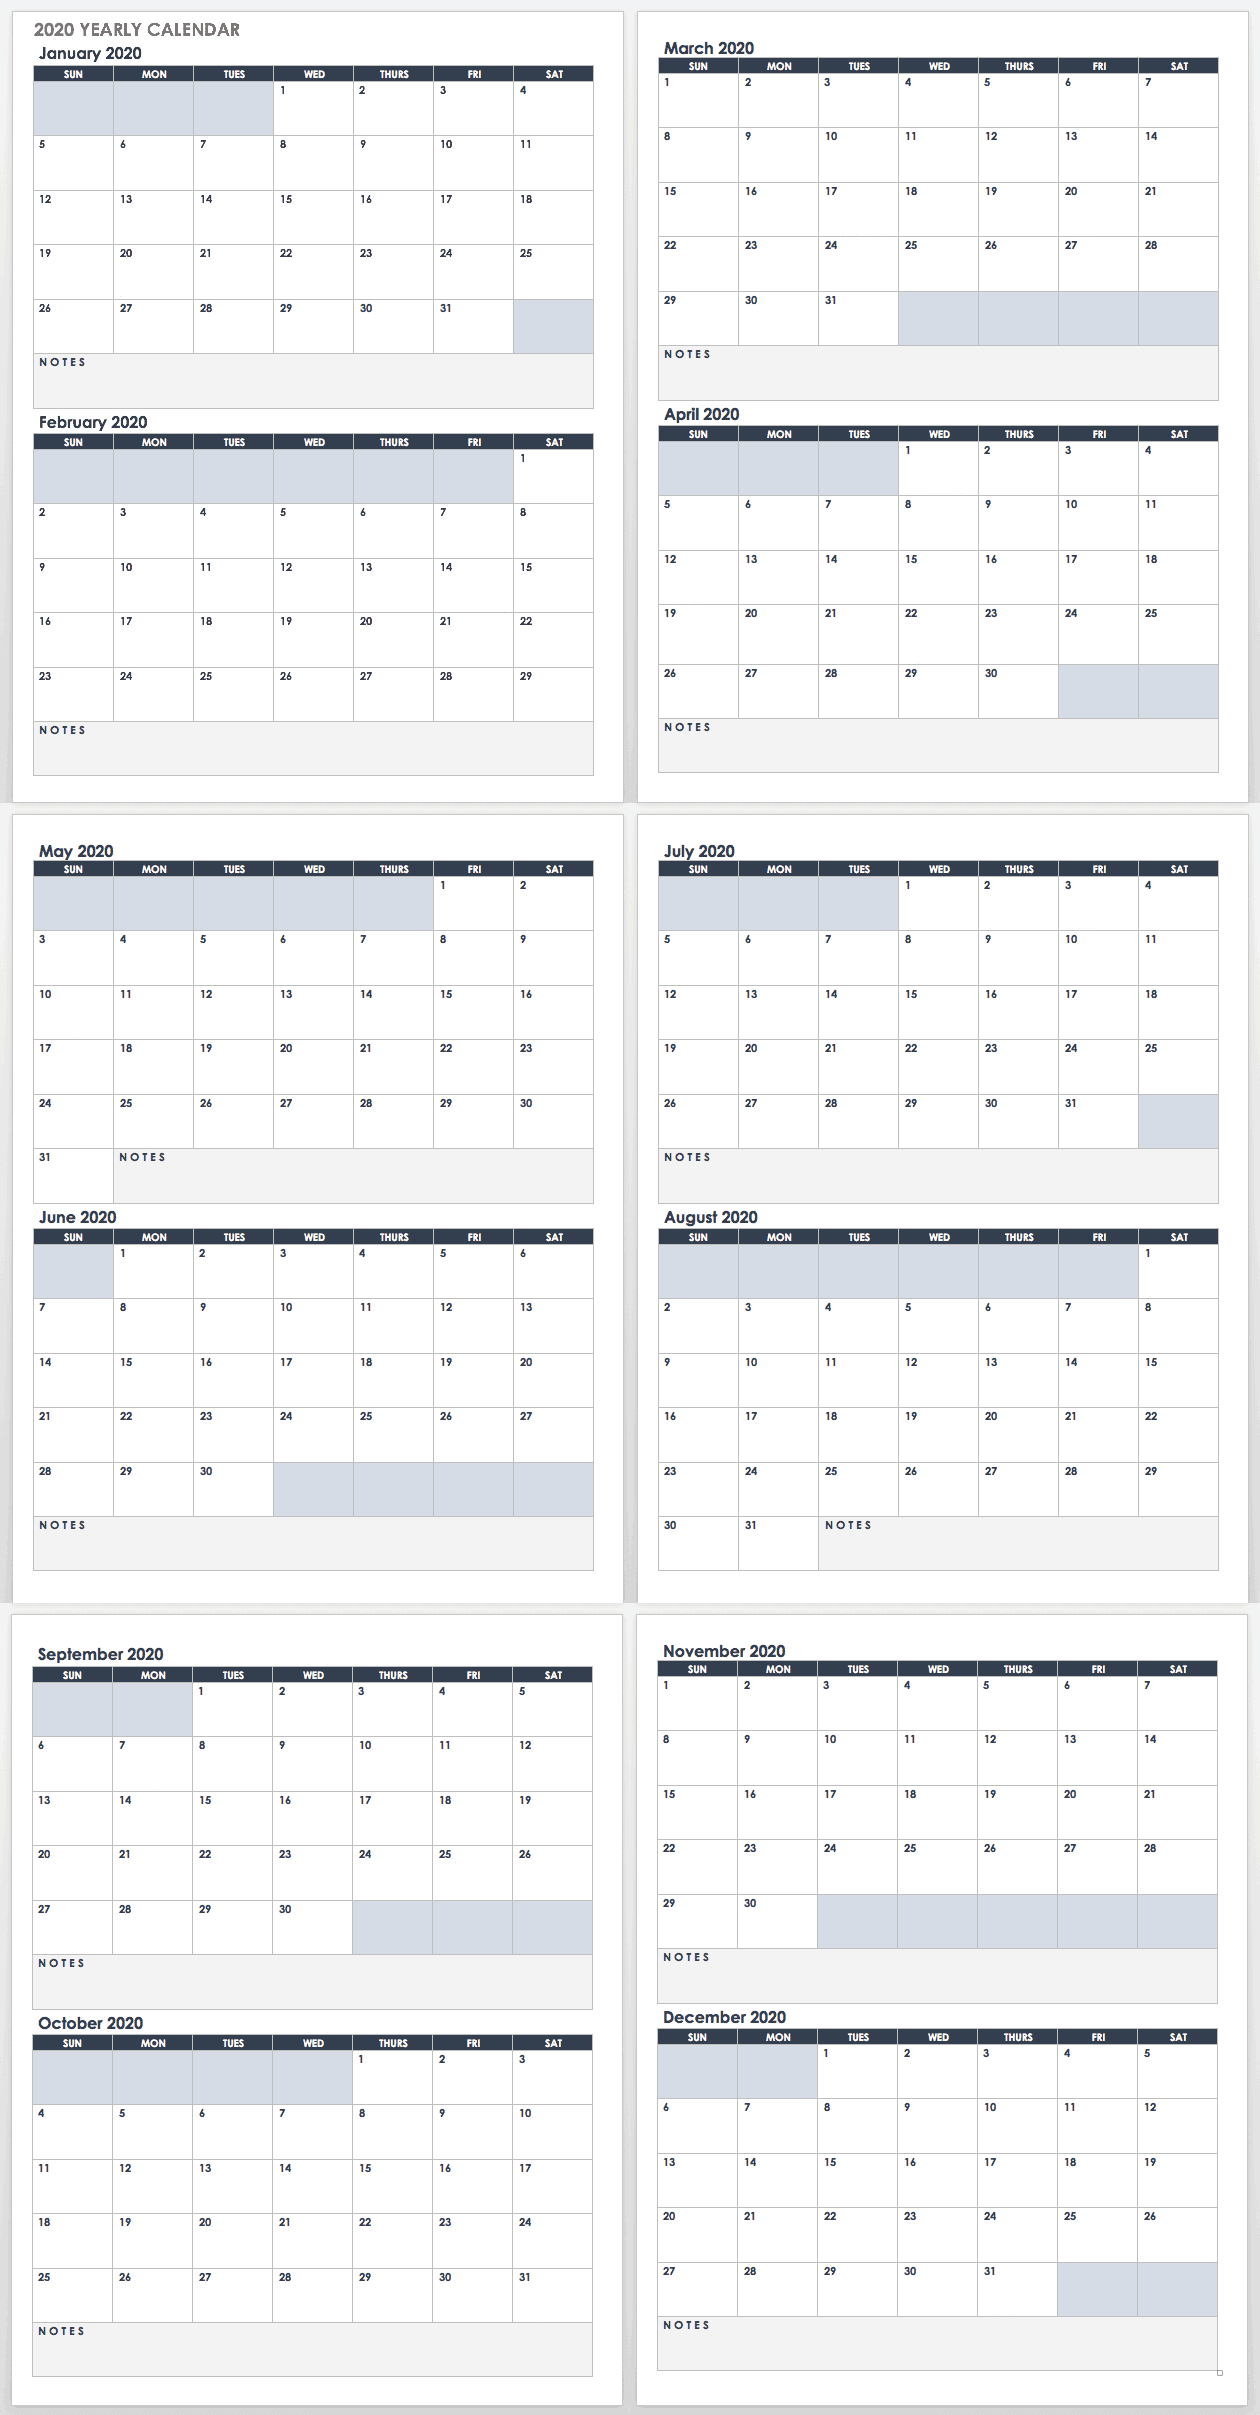 Free Google Calendar Templates | Smartsheet within Google Calendar Template 2020